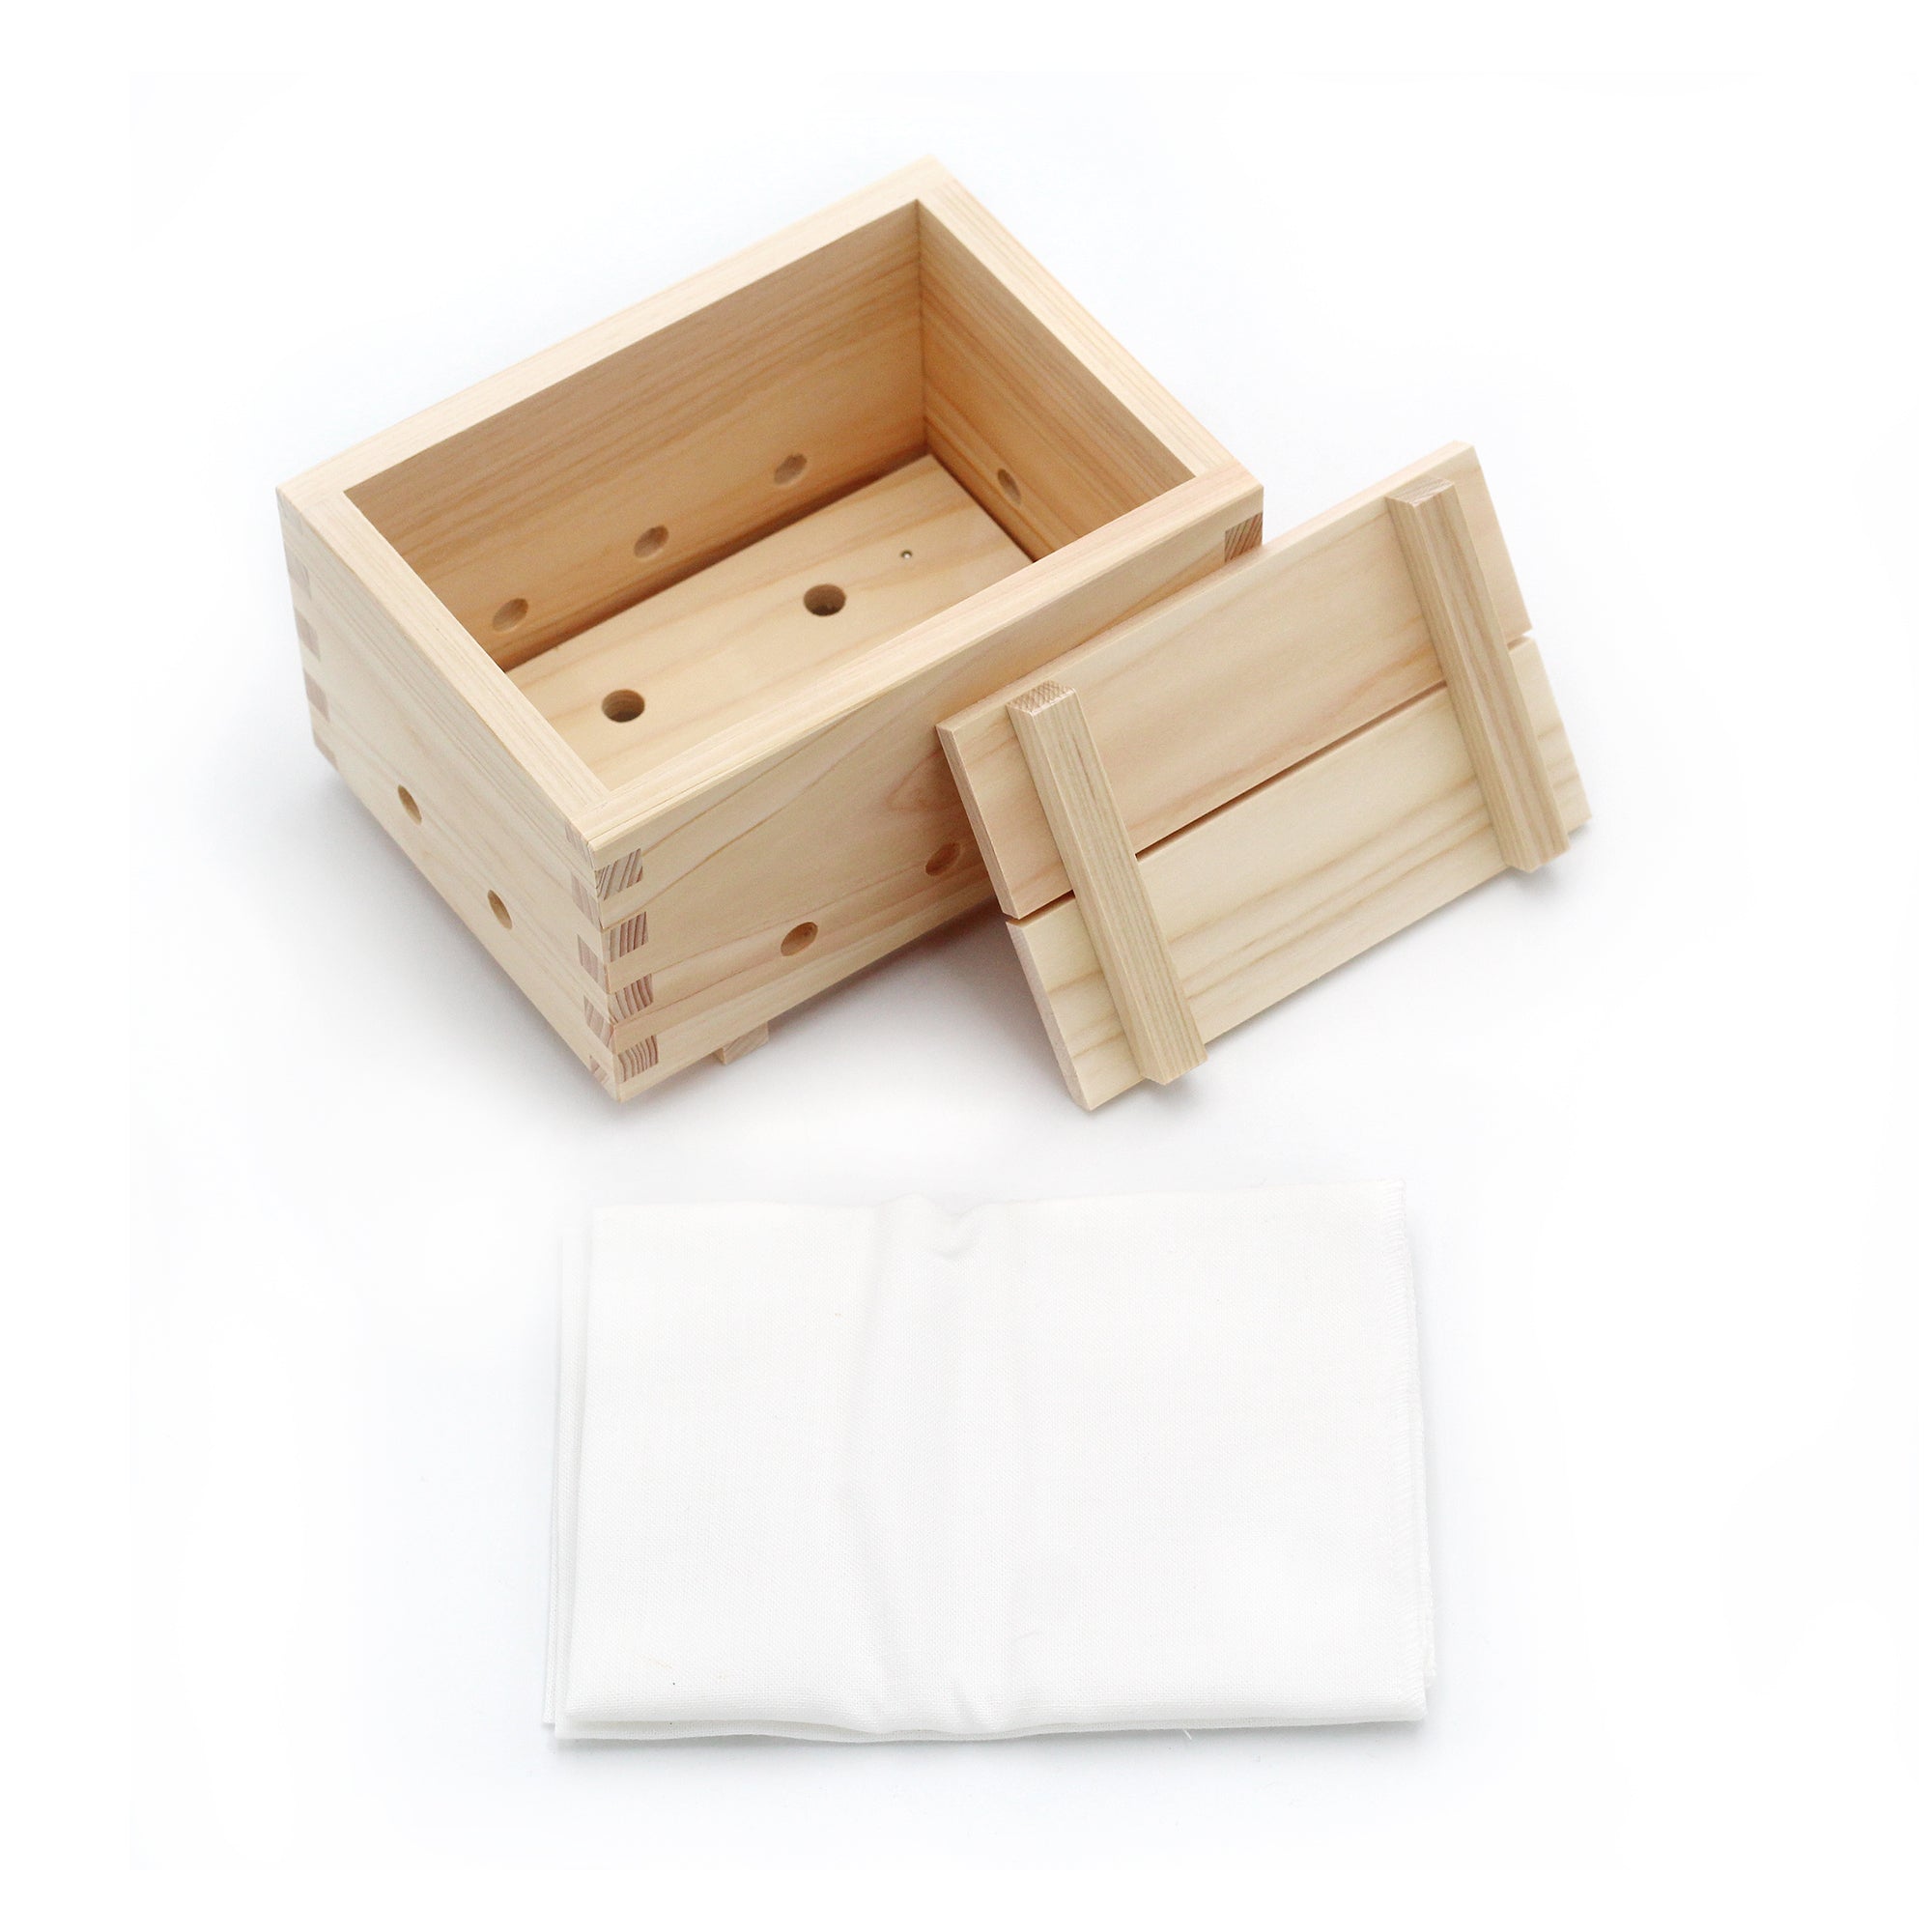 Tofu Maker Kit regular 3 Misure Disponibili, Handmade in Italy 